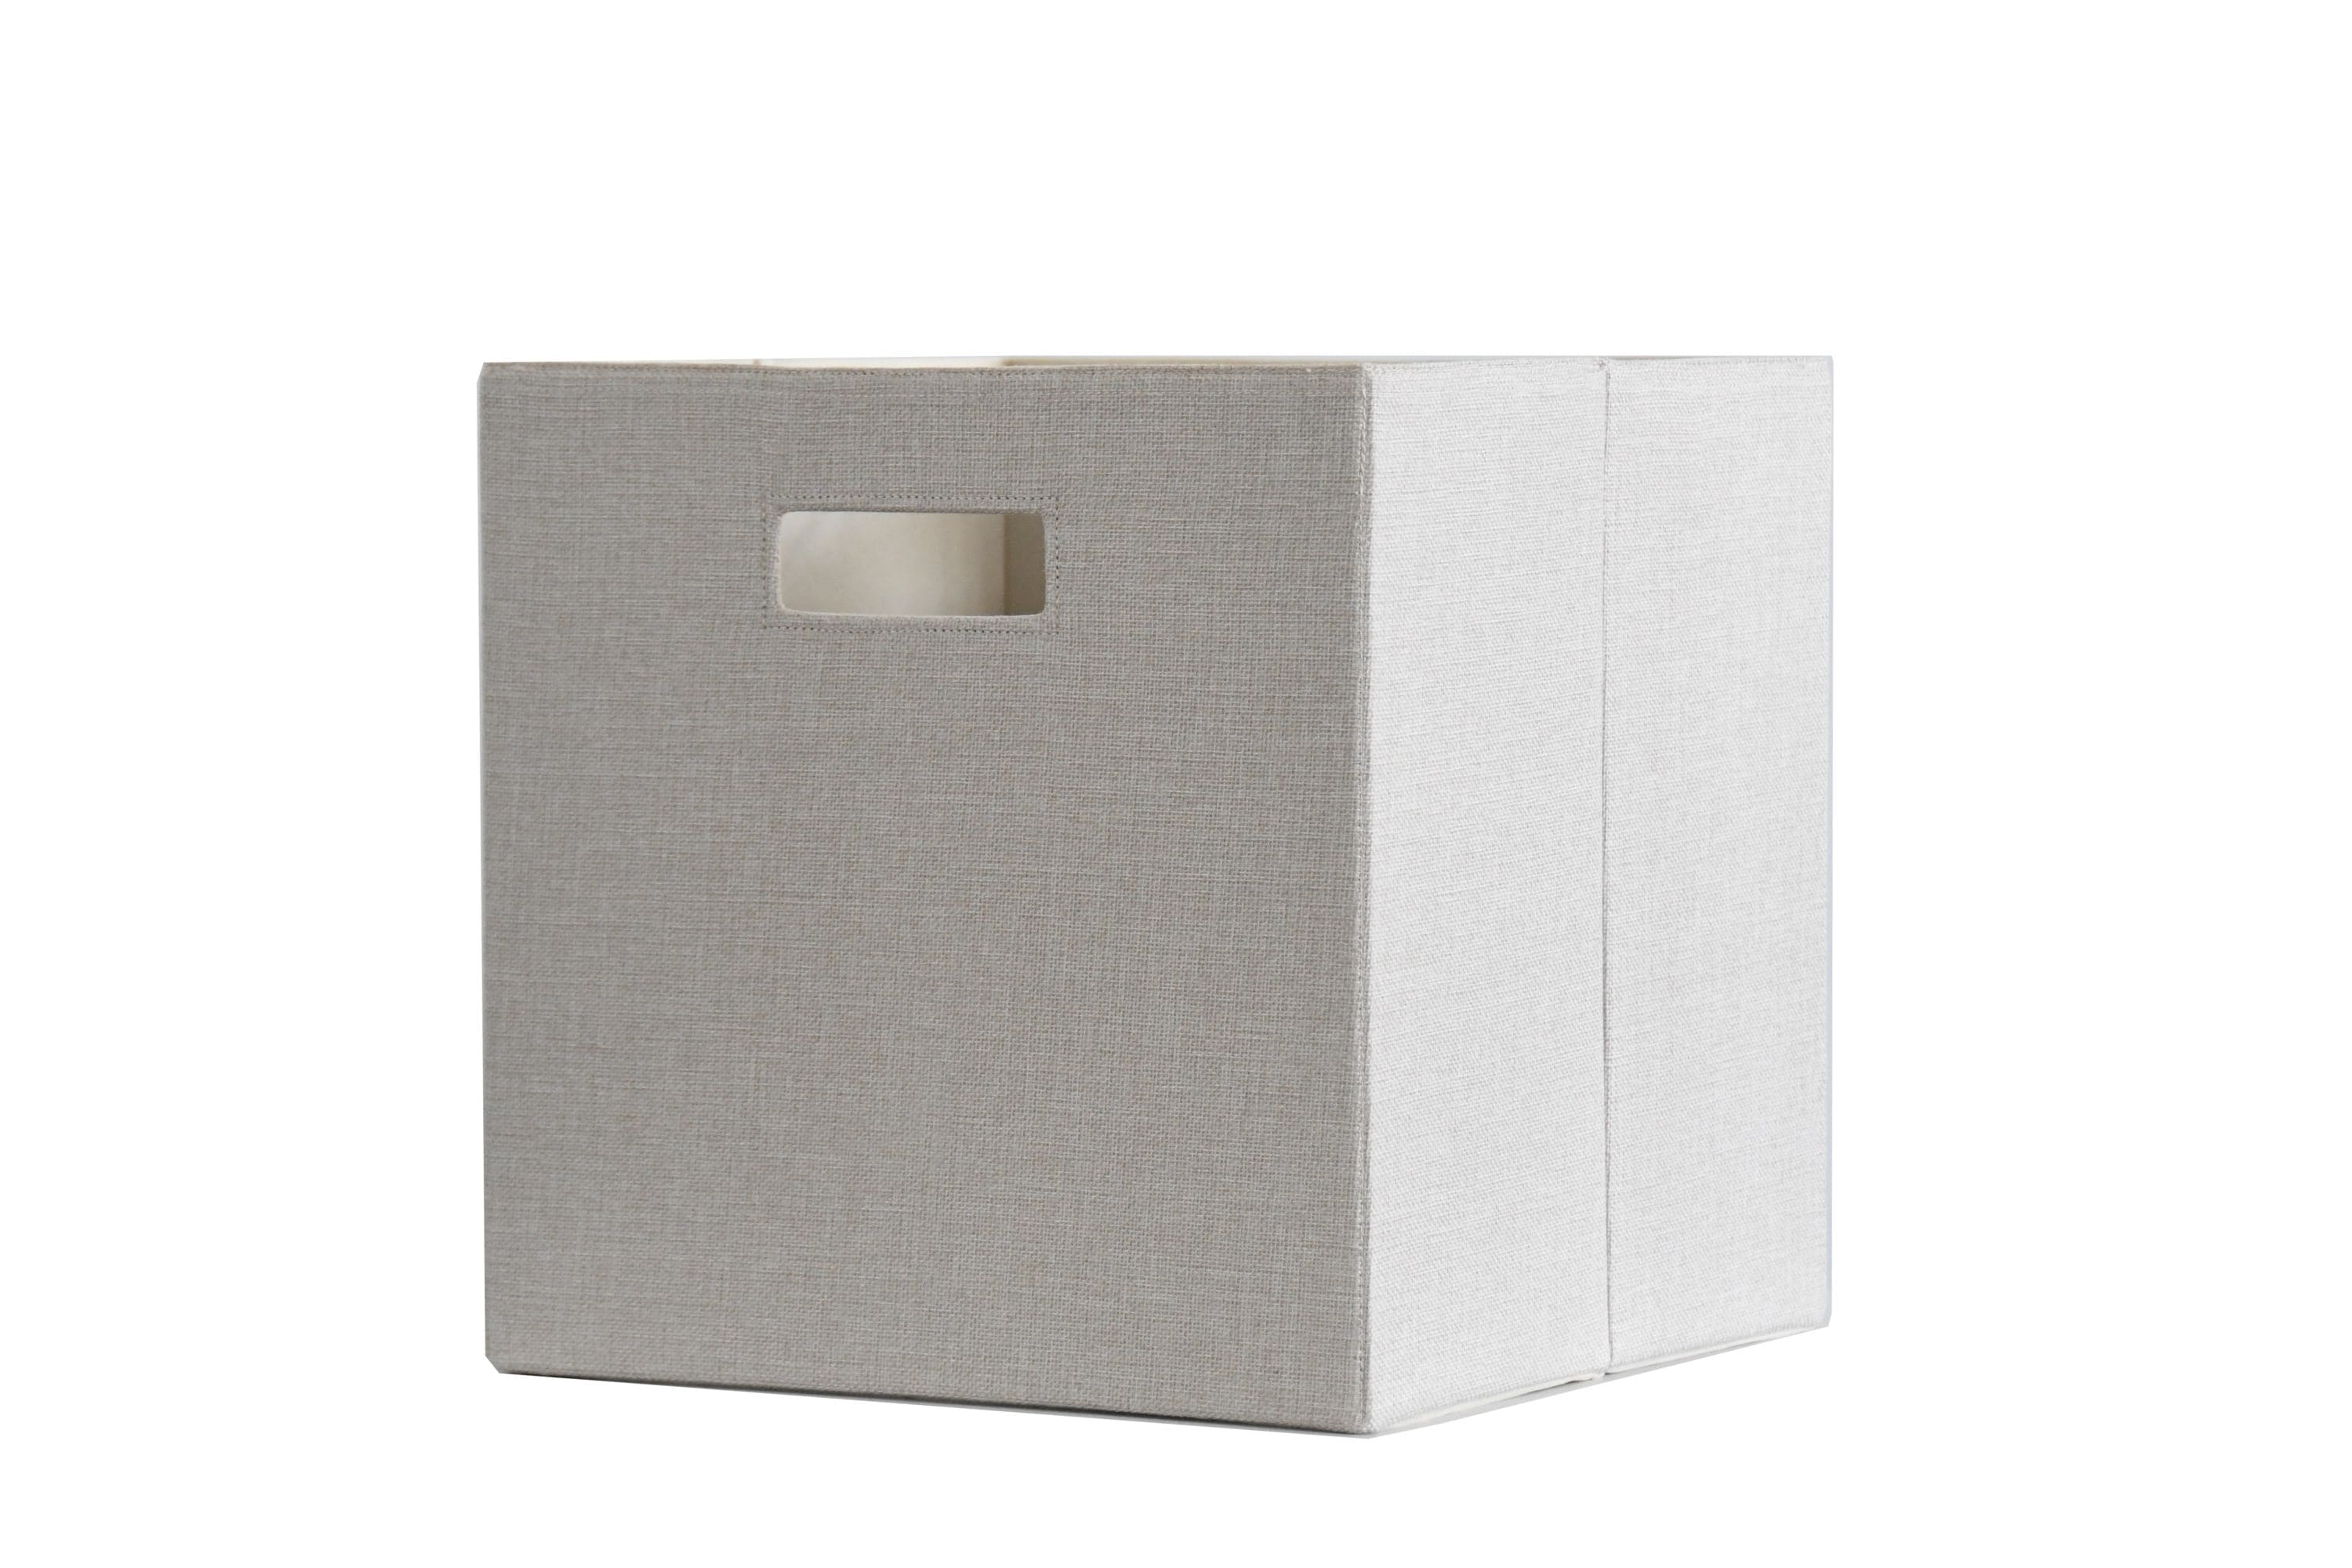 4 x 2 Inch, 11.5 Cubic Inch Welded Utility Box